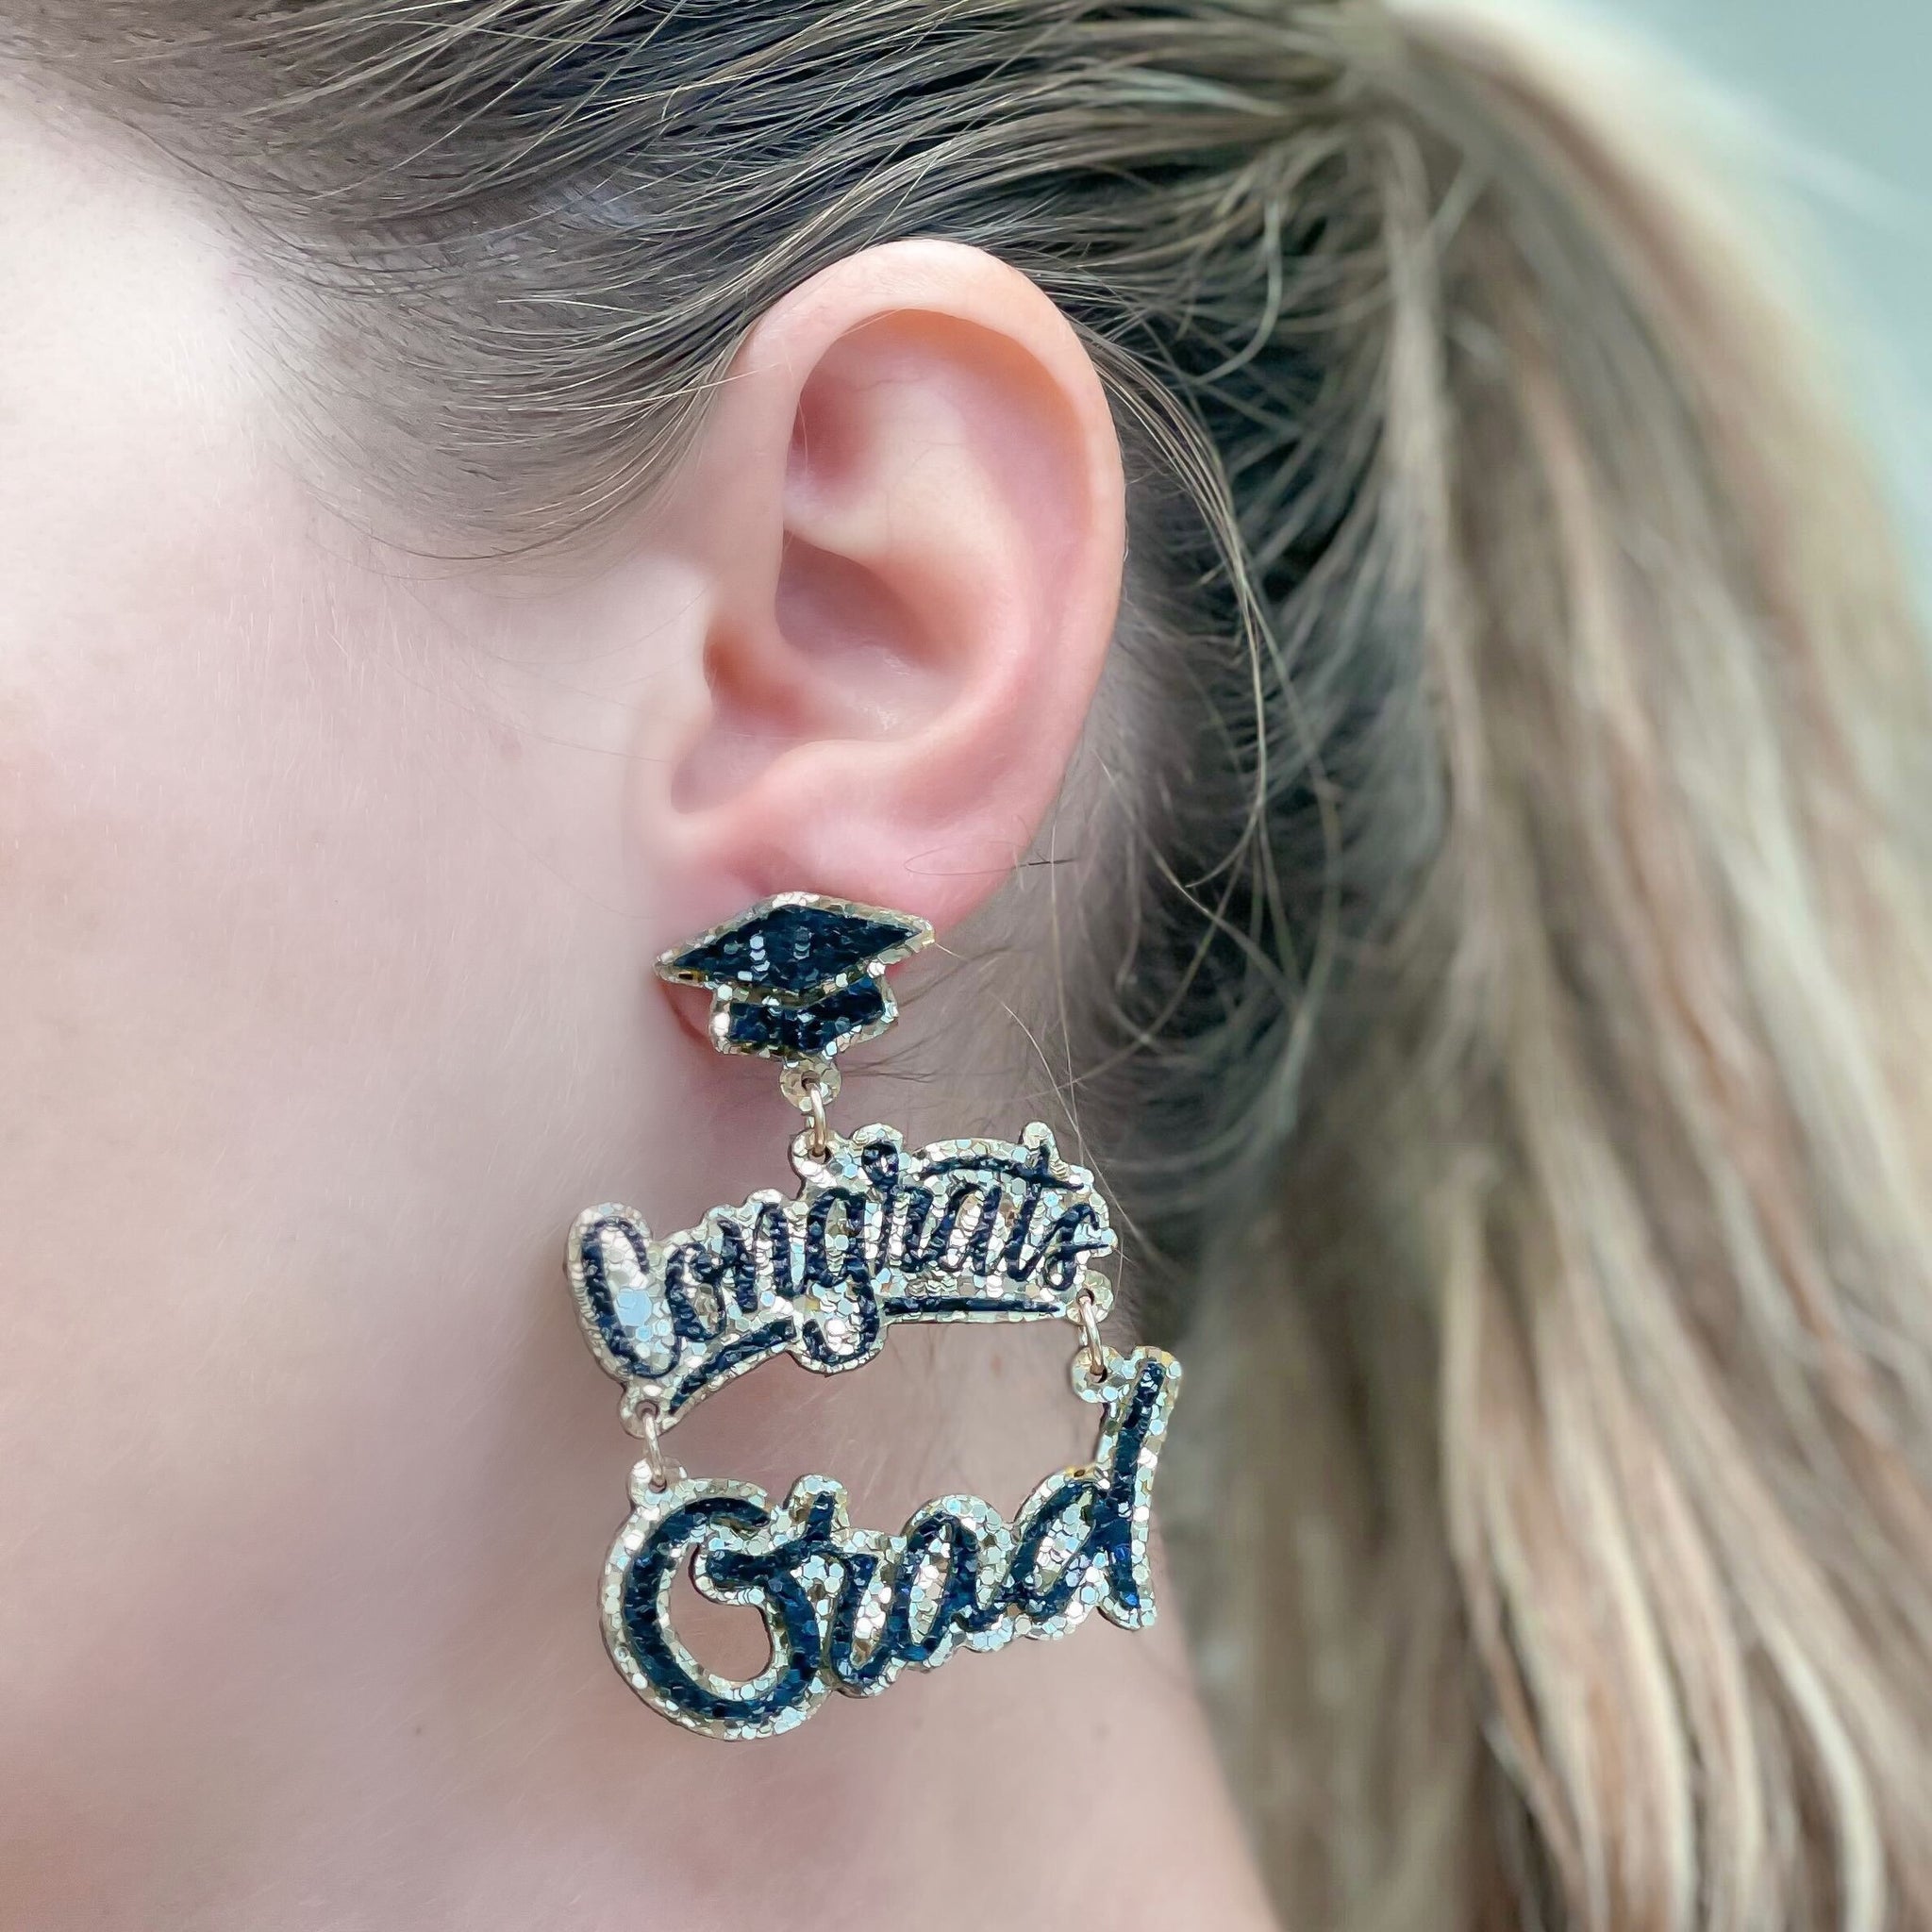 Gold Glitter Cursive 'Congrats Grad' Dangle Earrings